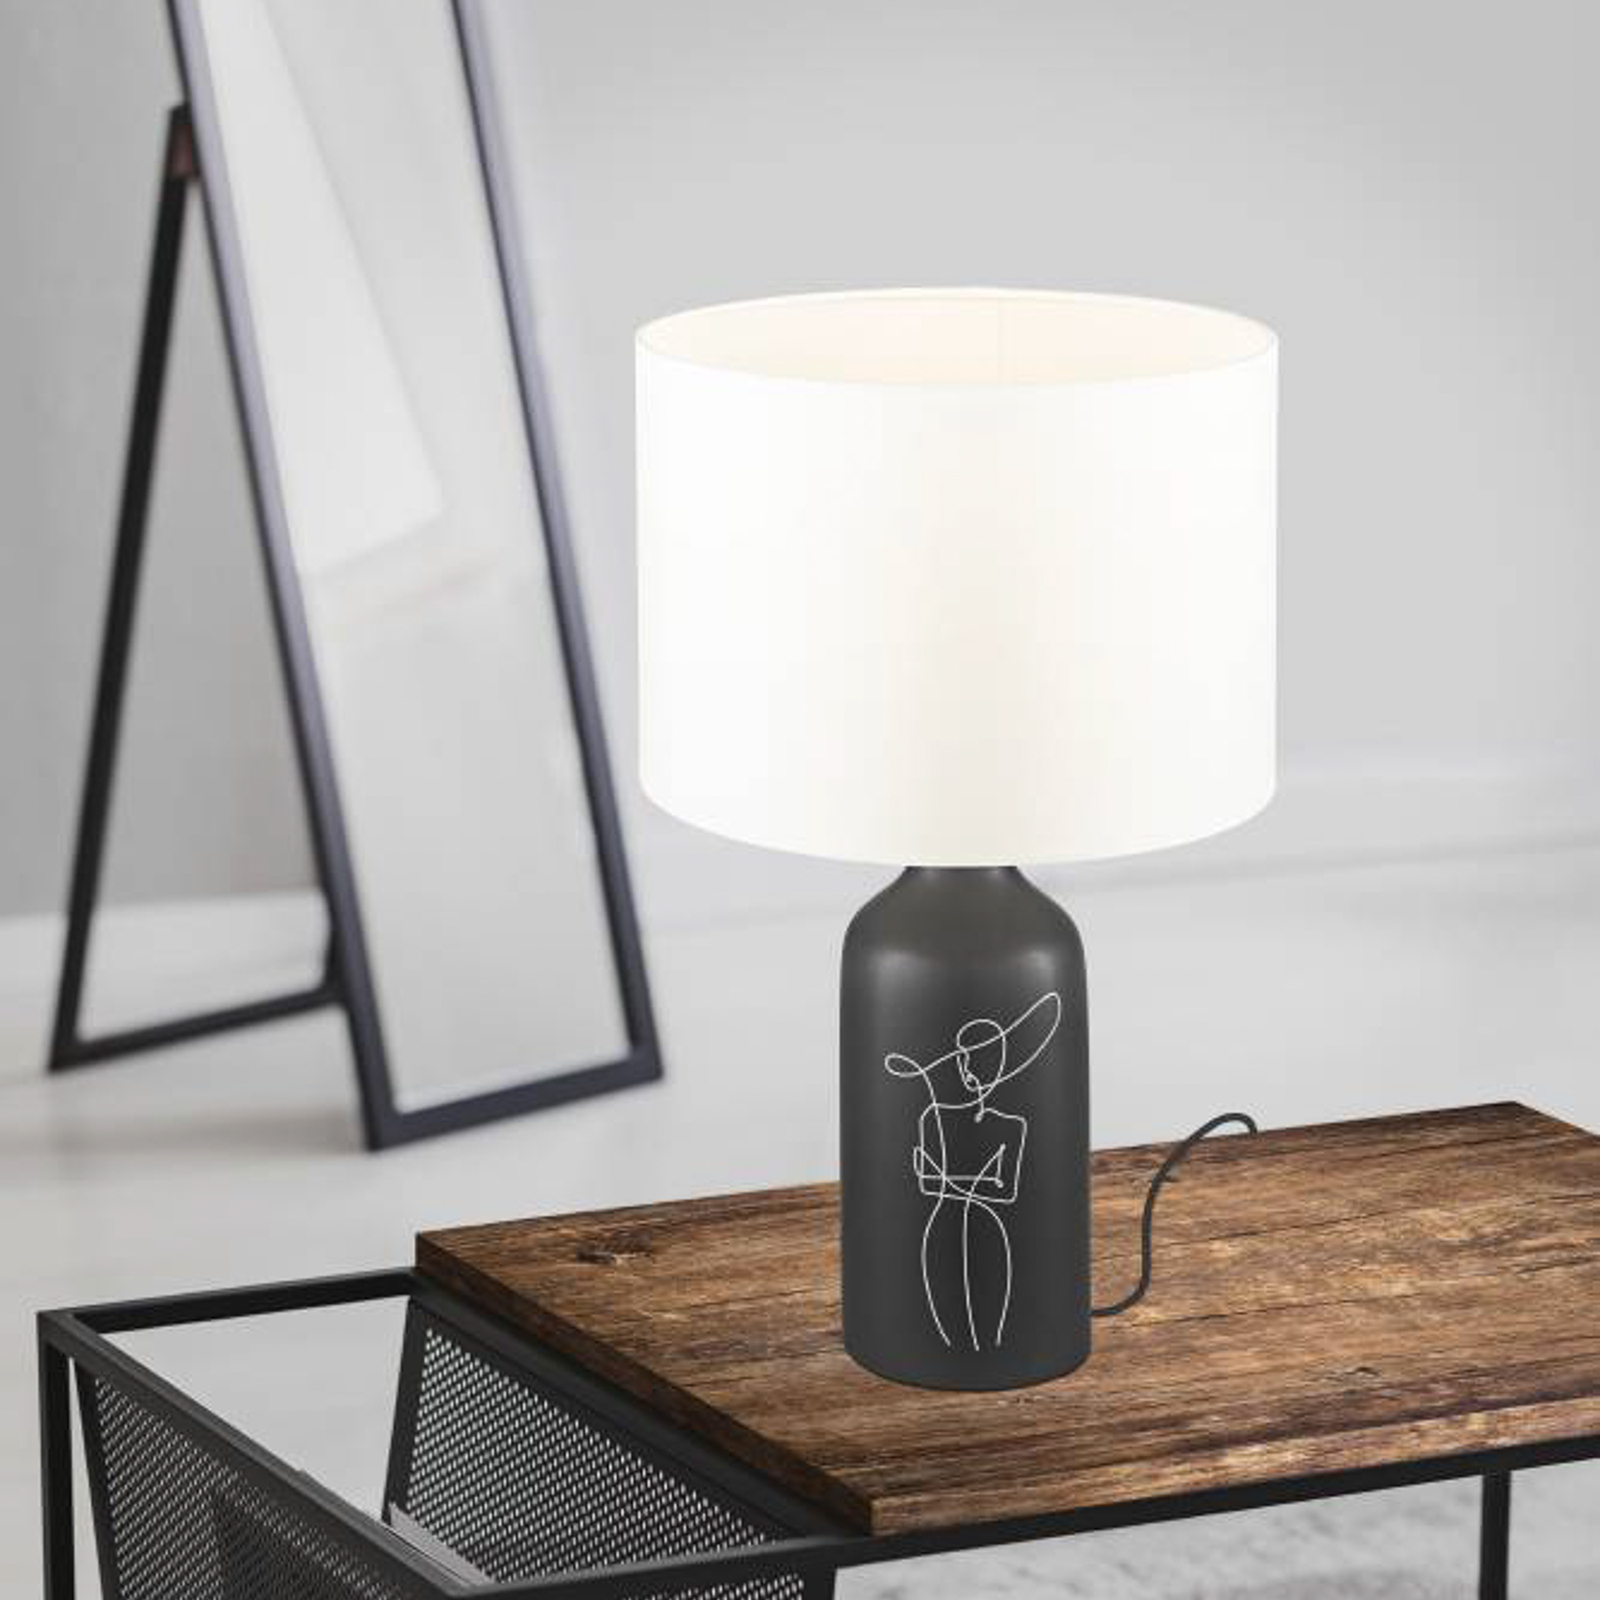 EGLO Vinoza bordslampa, fot svart, skärm vit